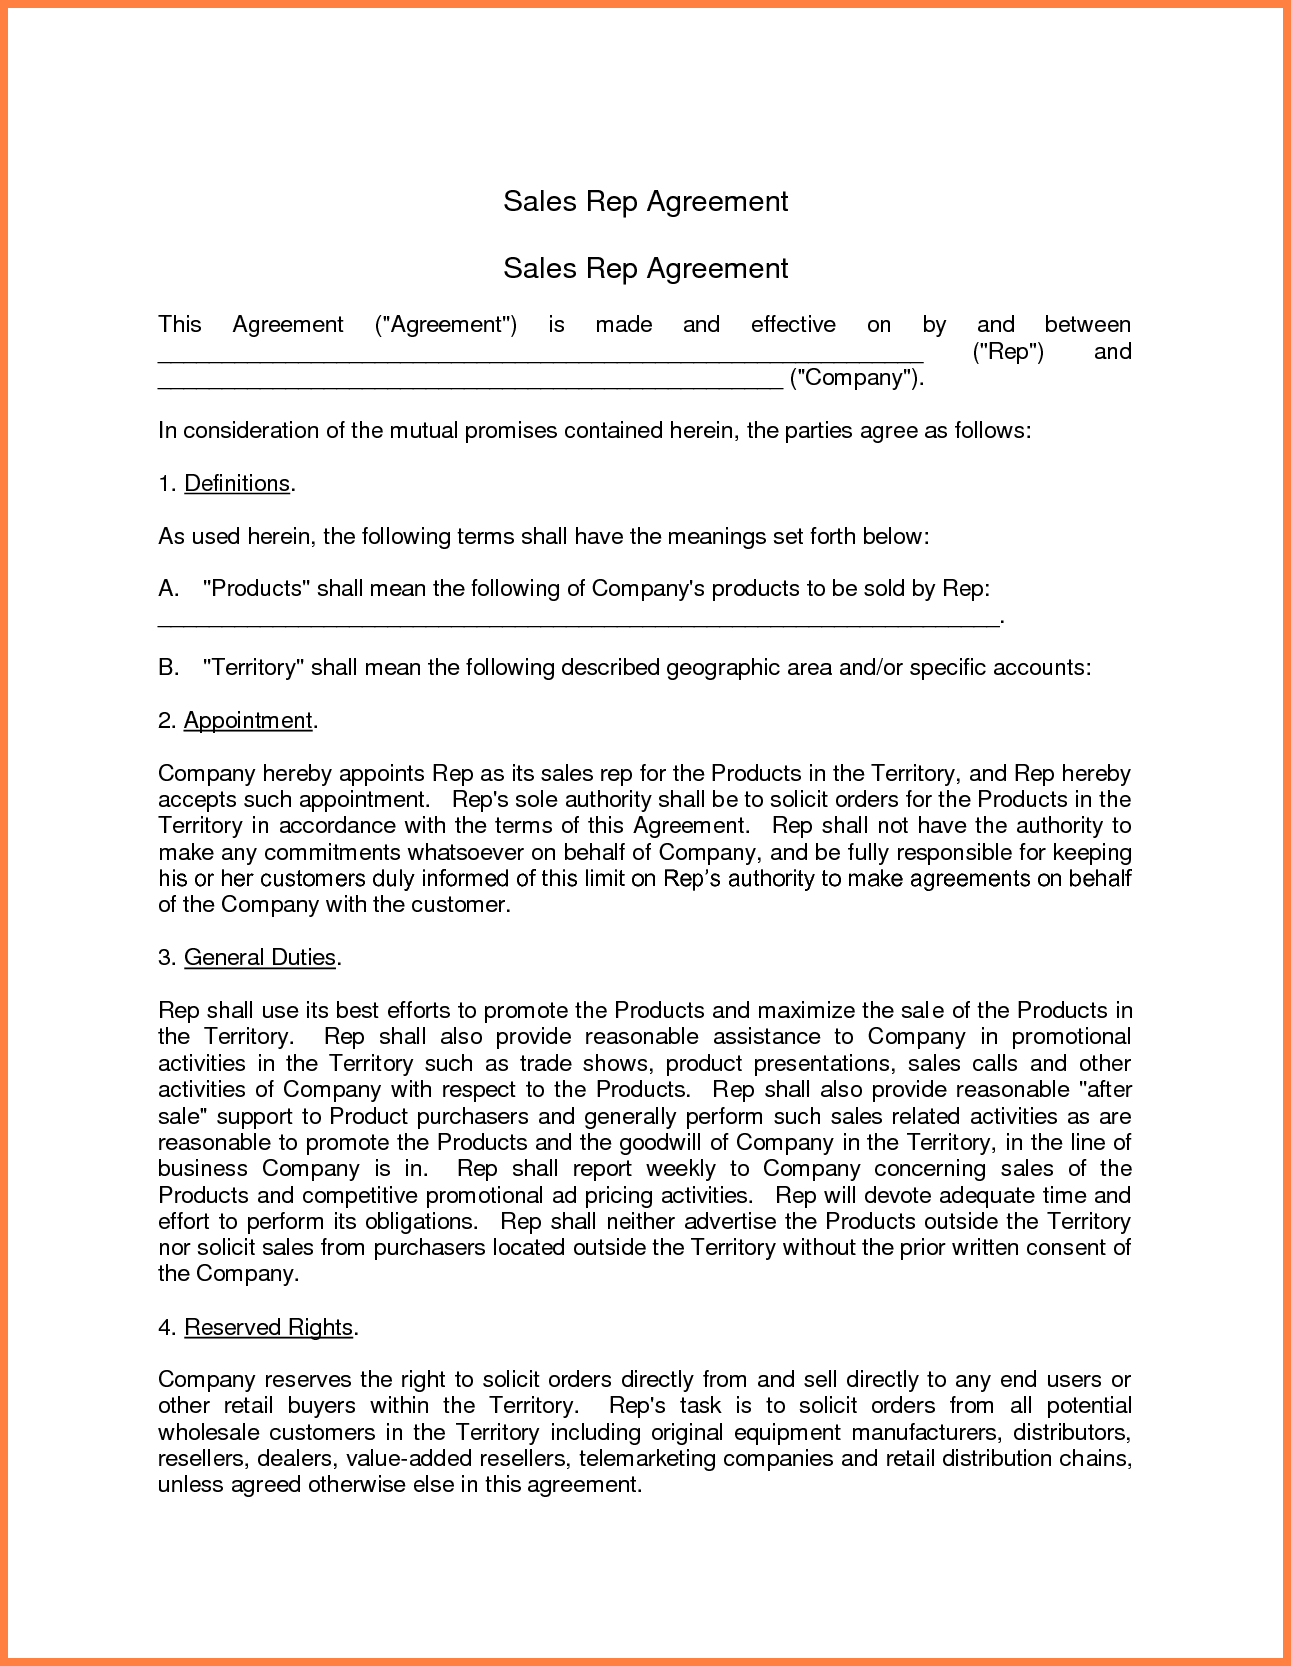 Company Representative Agreement Wholesale Purchase And Sale Agreement 94885 6 Sales Representative